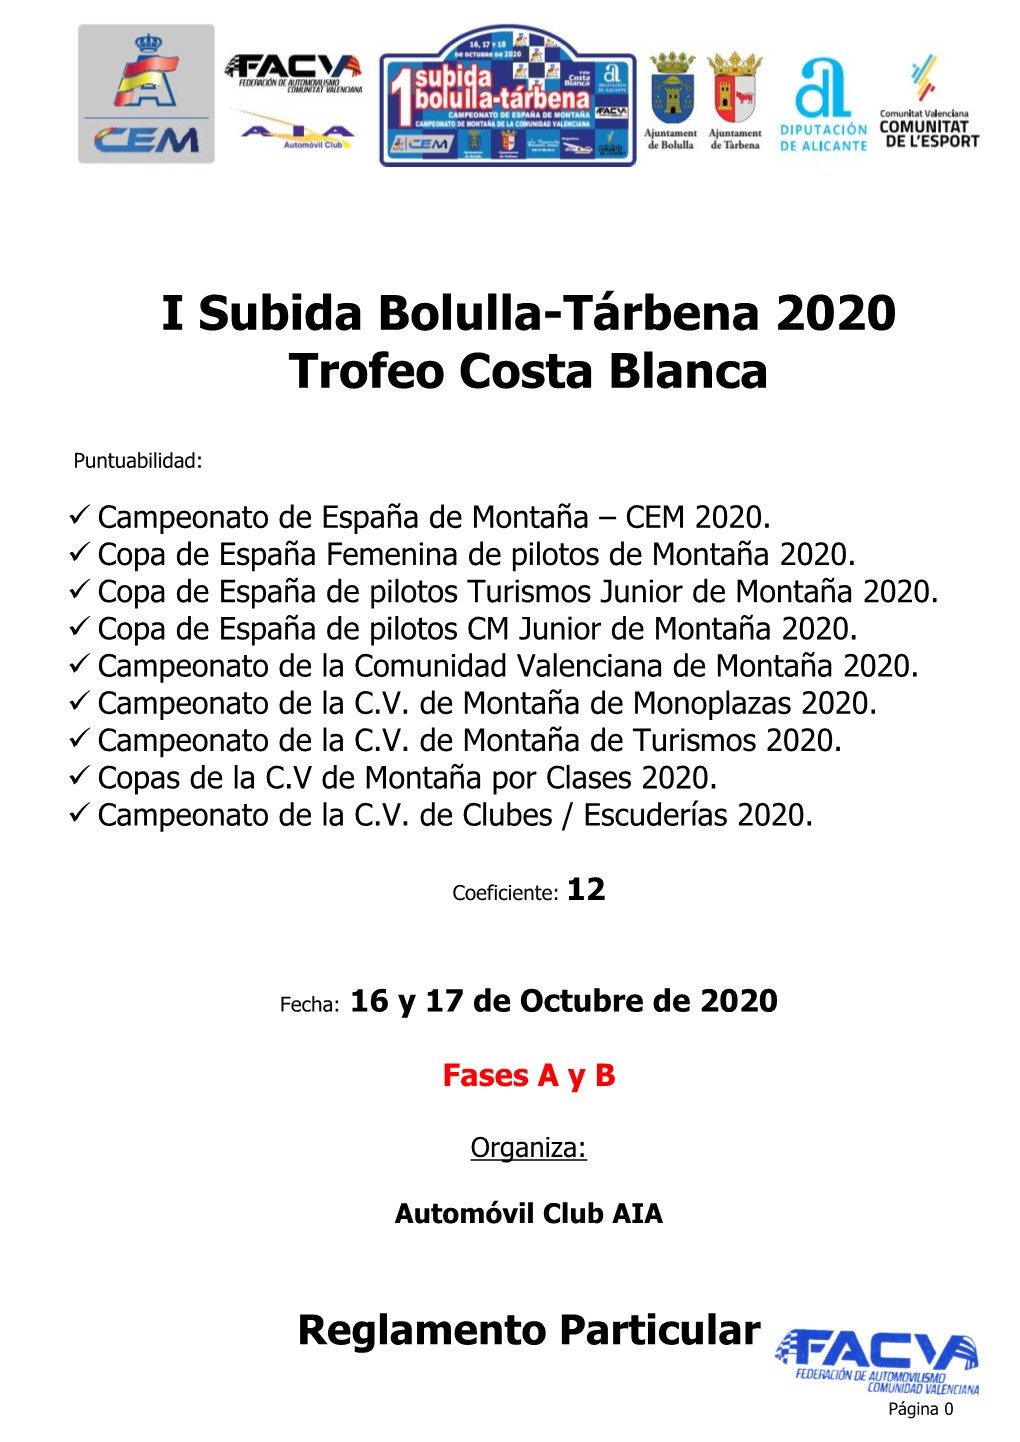 I Subida Bolulla-Tárbena 2020 Trofeo Costa Blanca